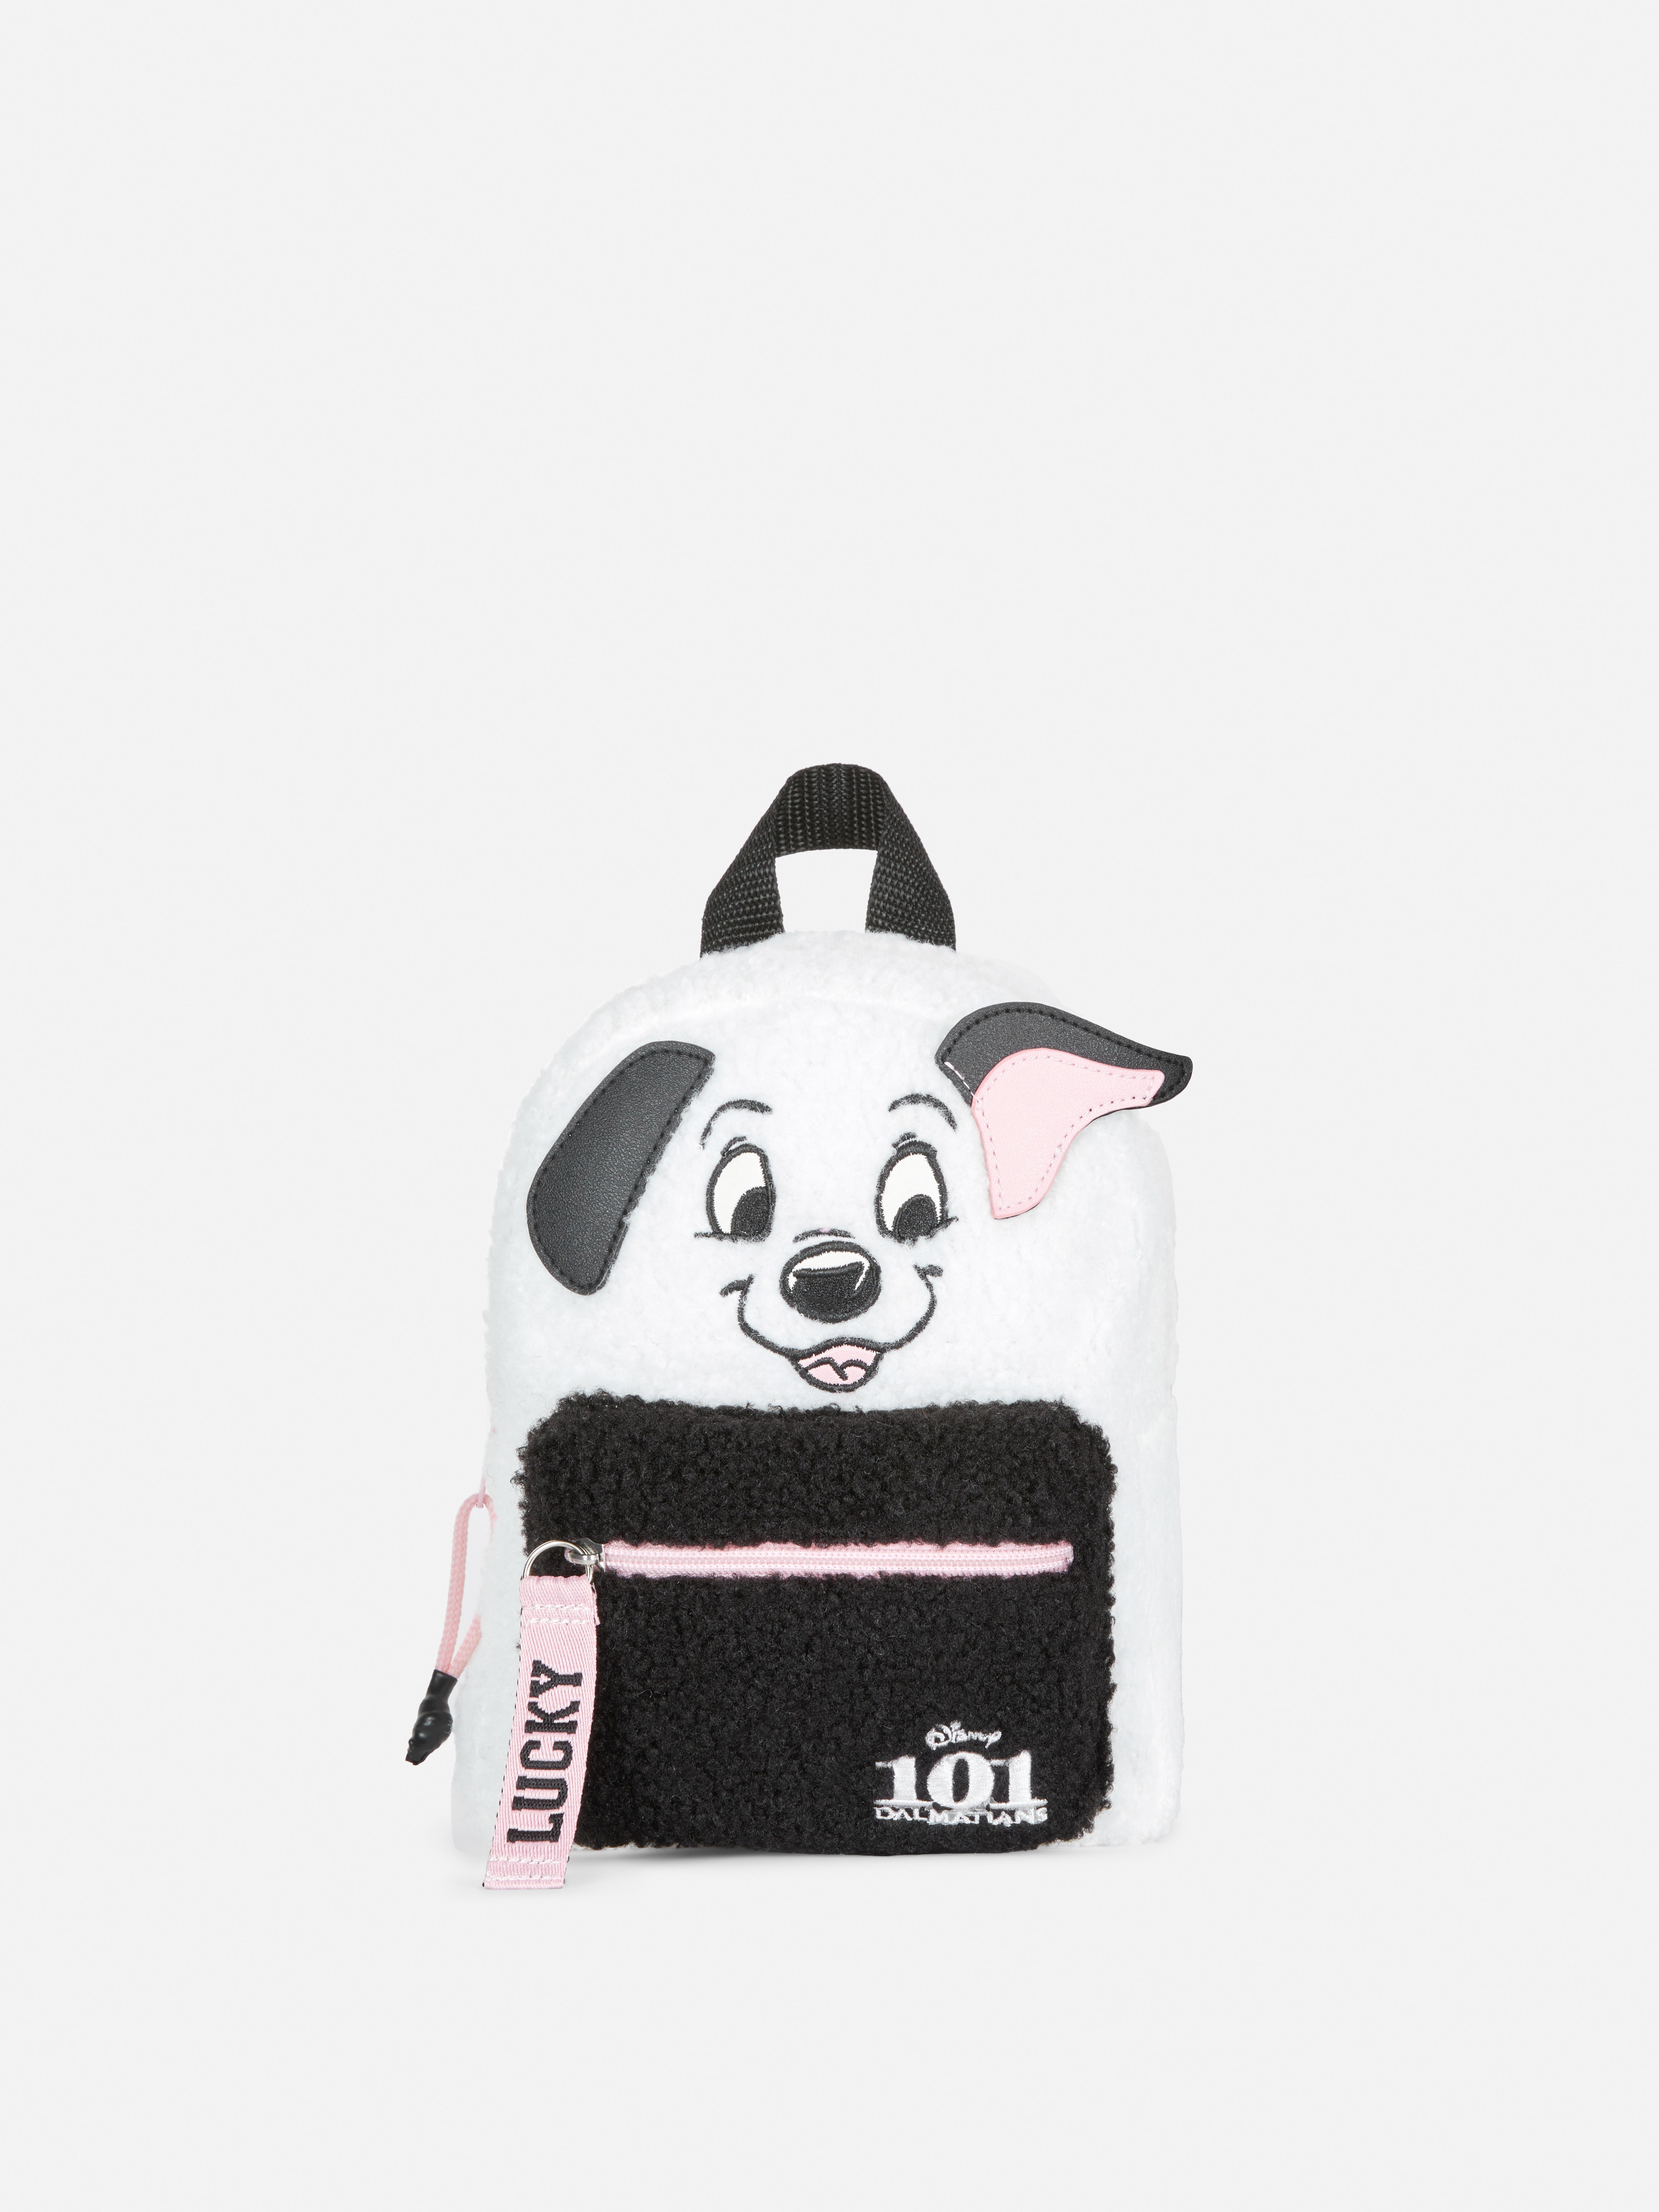 Disney's 101 Dalmatians Mini Backpack